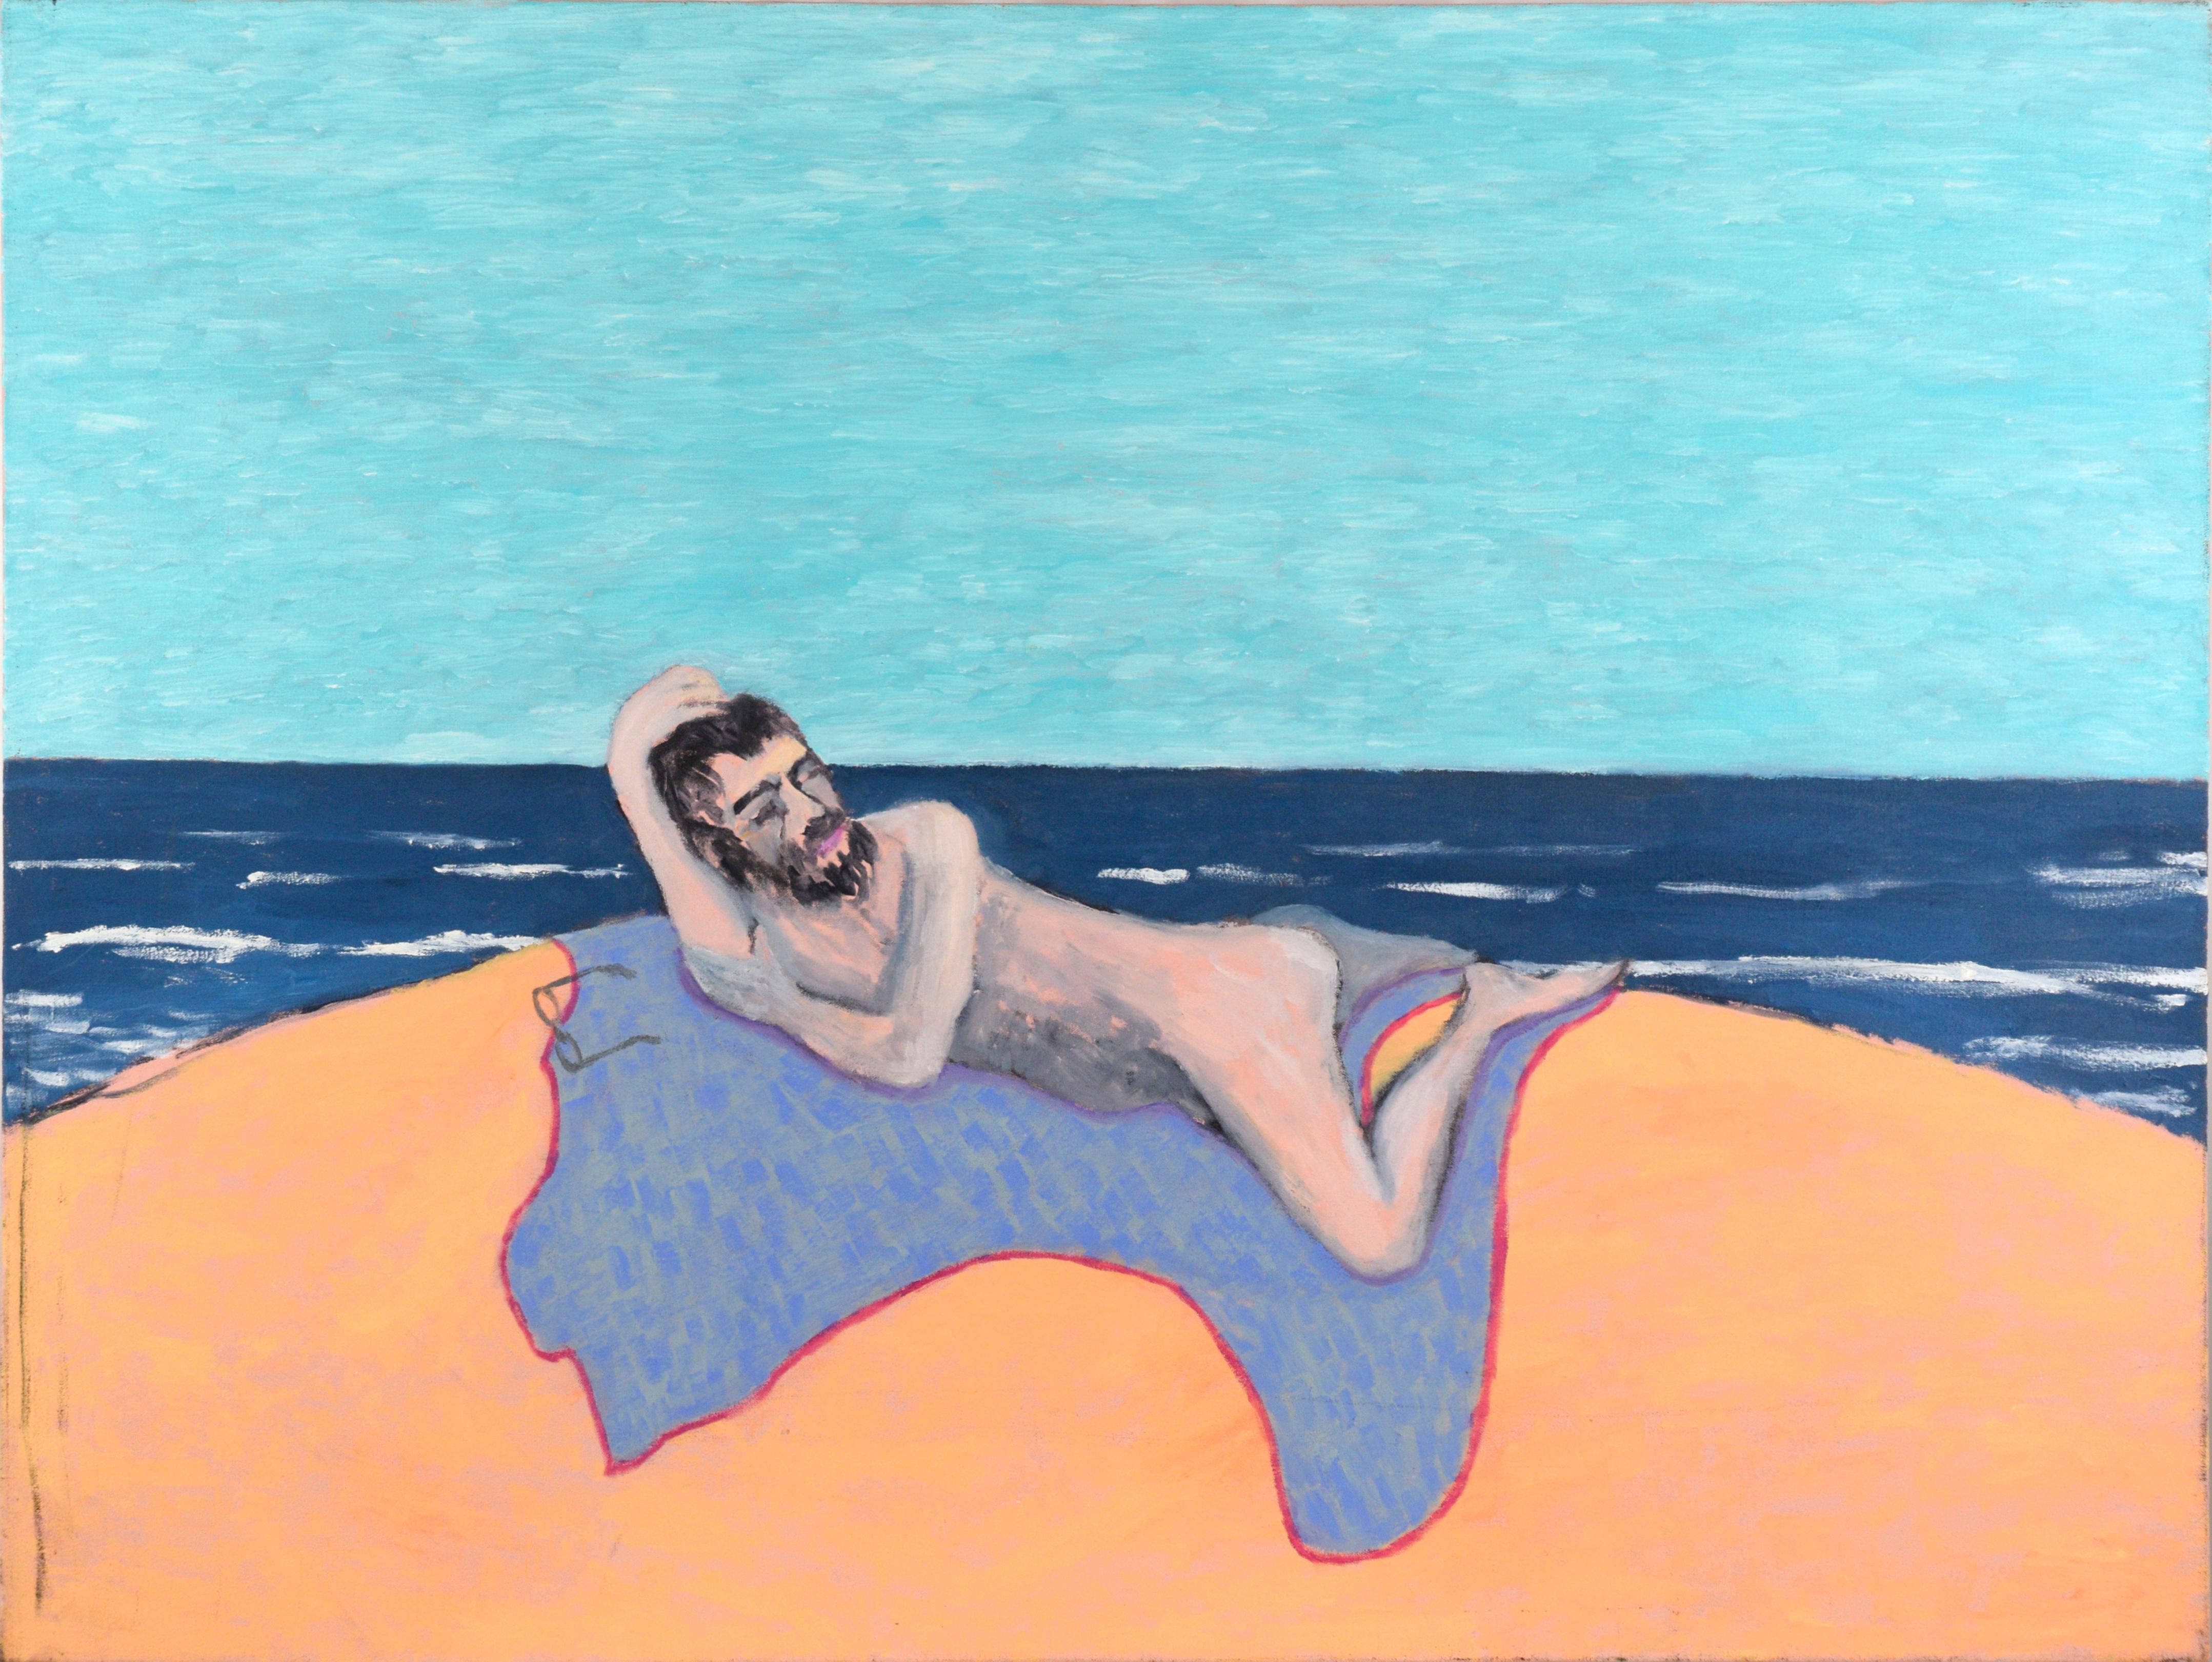 Michael Pauker  Landscape Painting - Artist's Dream VIII - Waking Up, Contemporary Surreal Self-Portrait on Beach